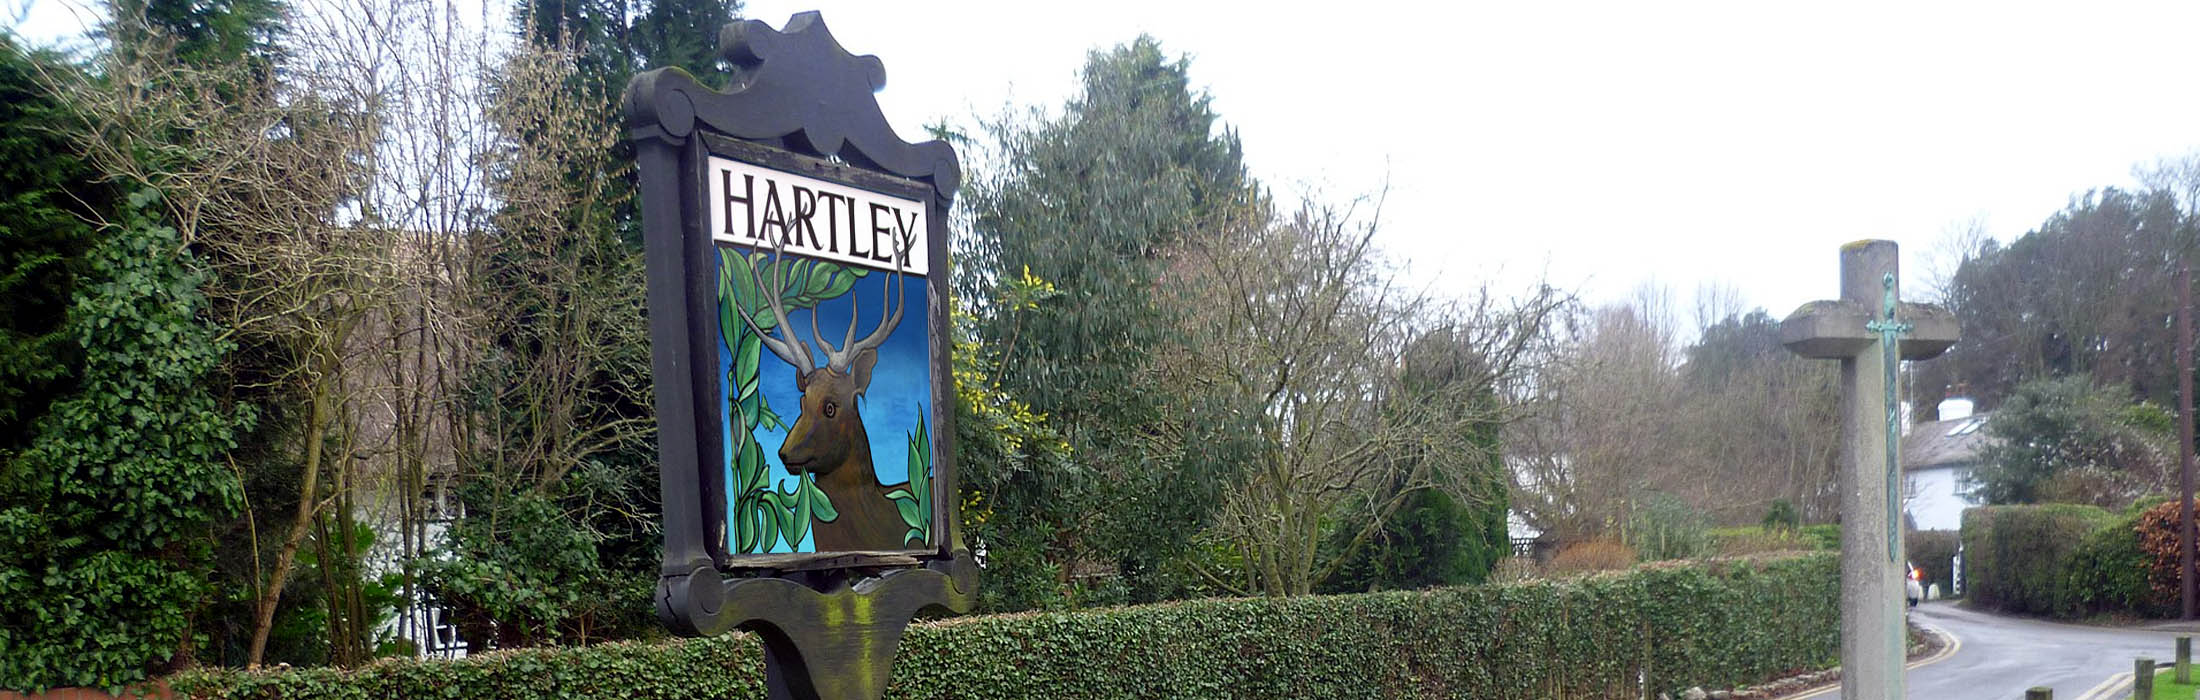 Header Image for Hartley Parish Council